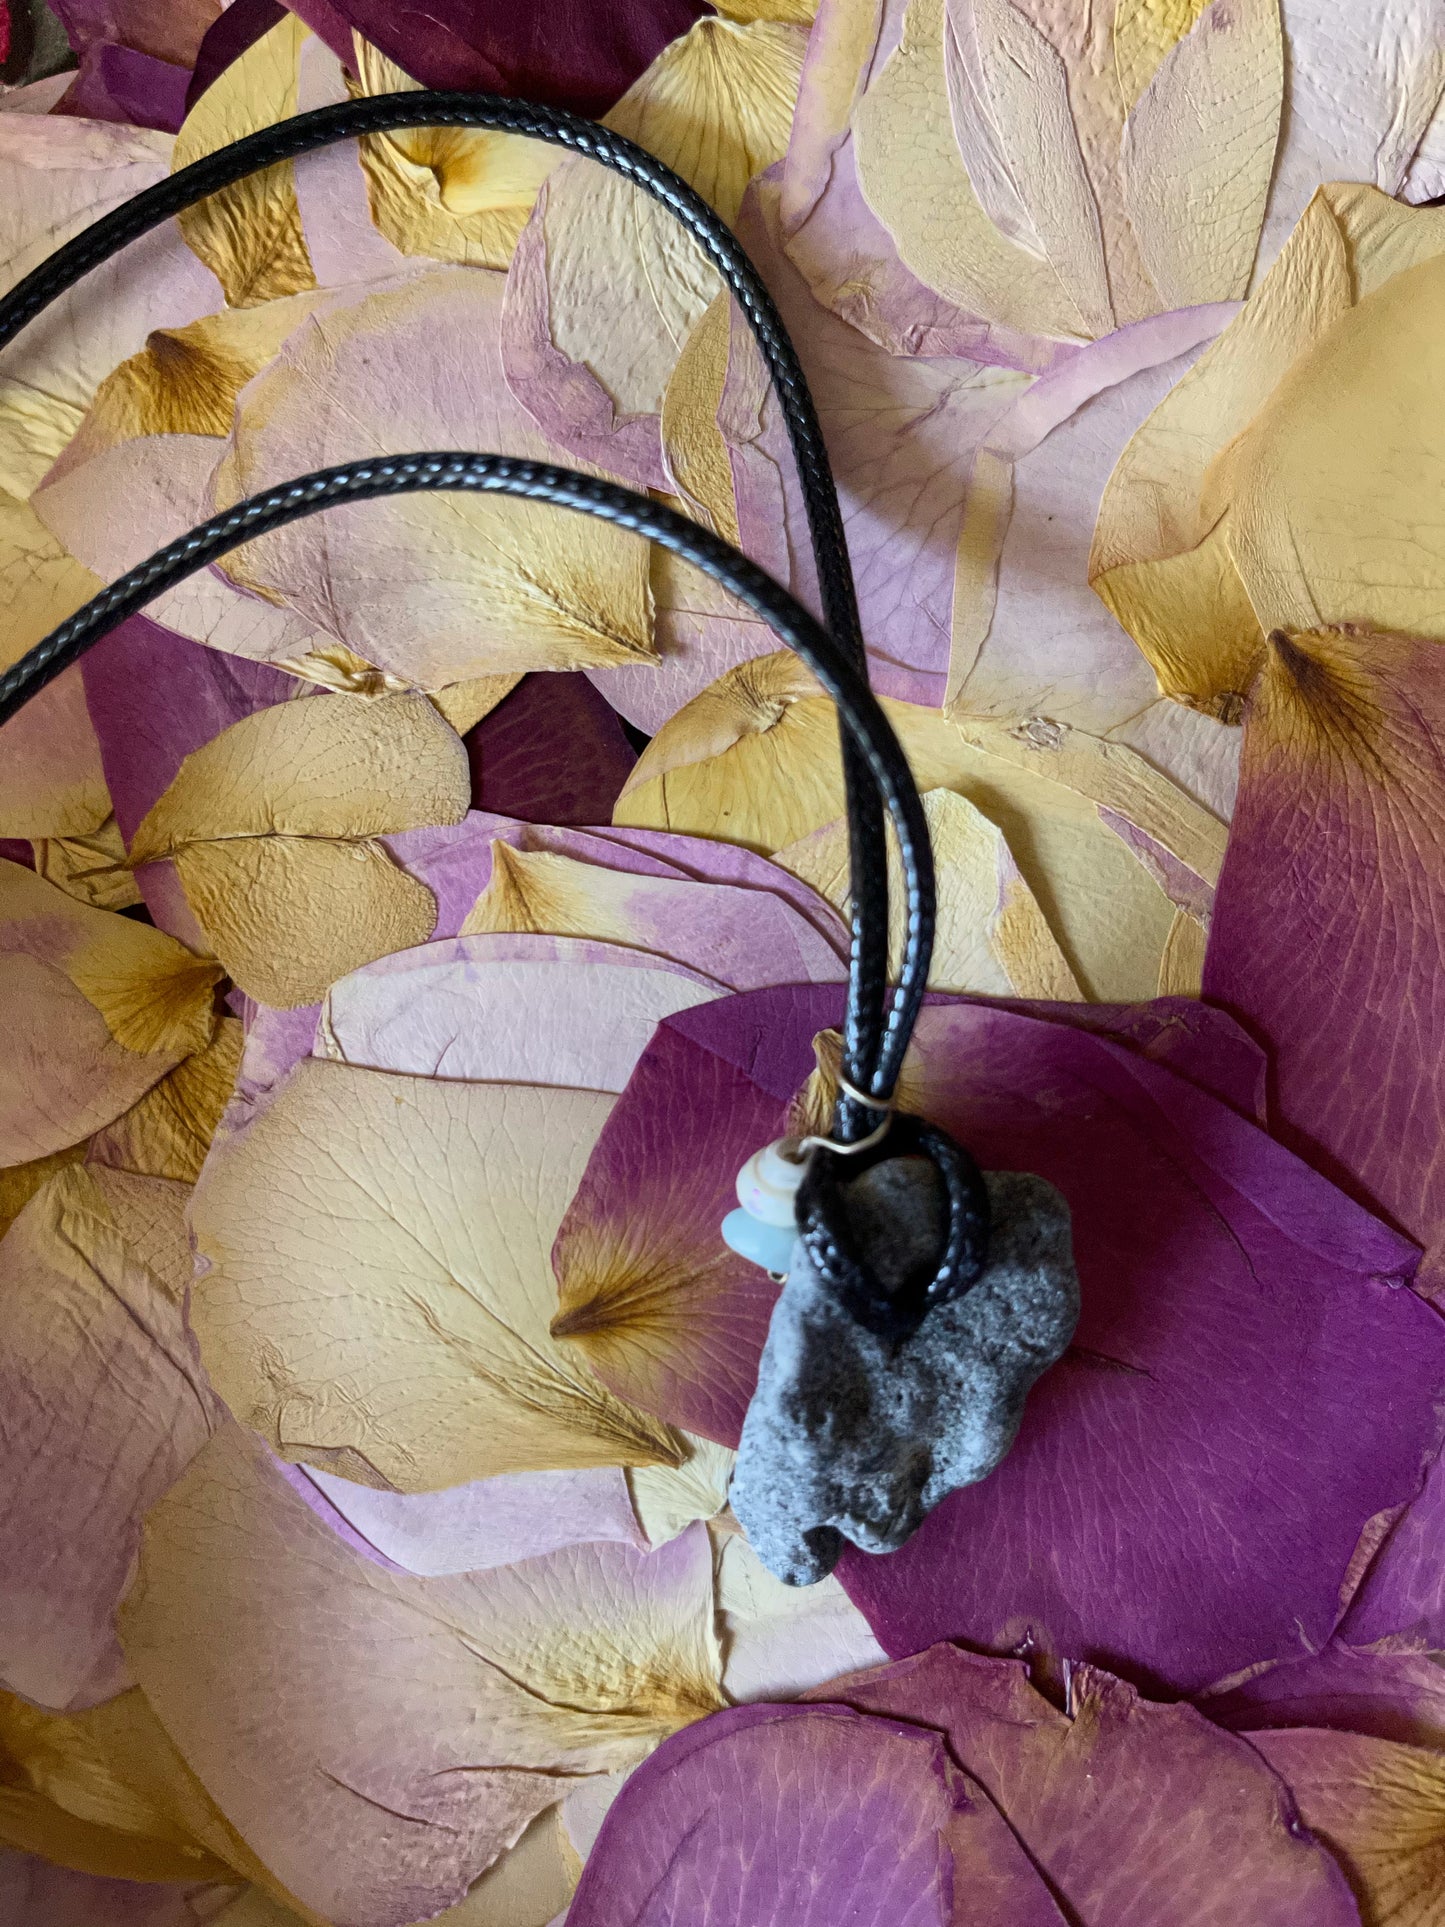 Hag Stone Necklace, Bodhi Jewelry